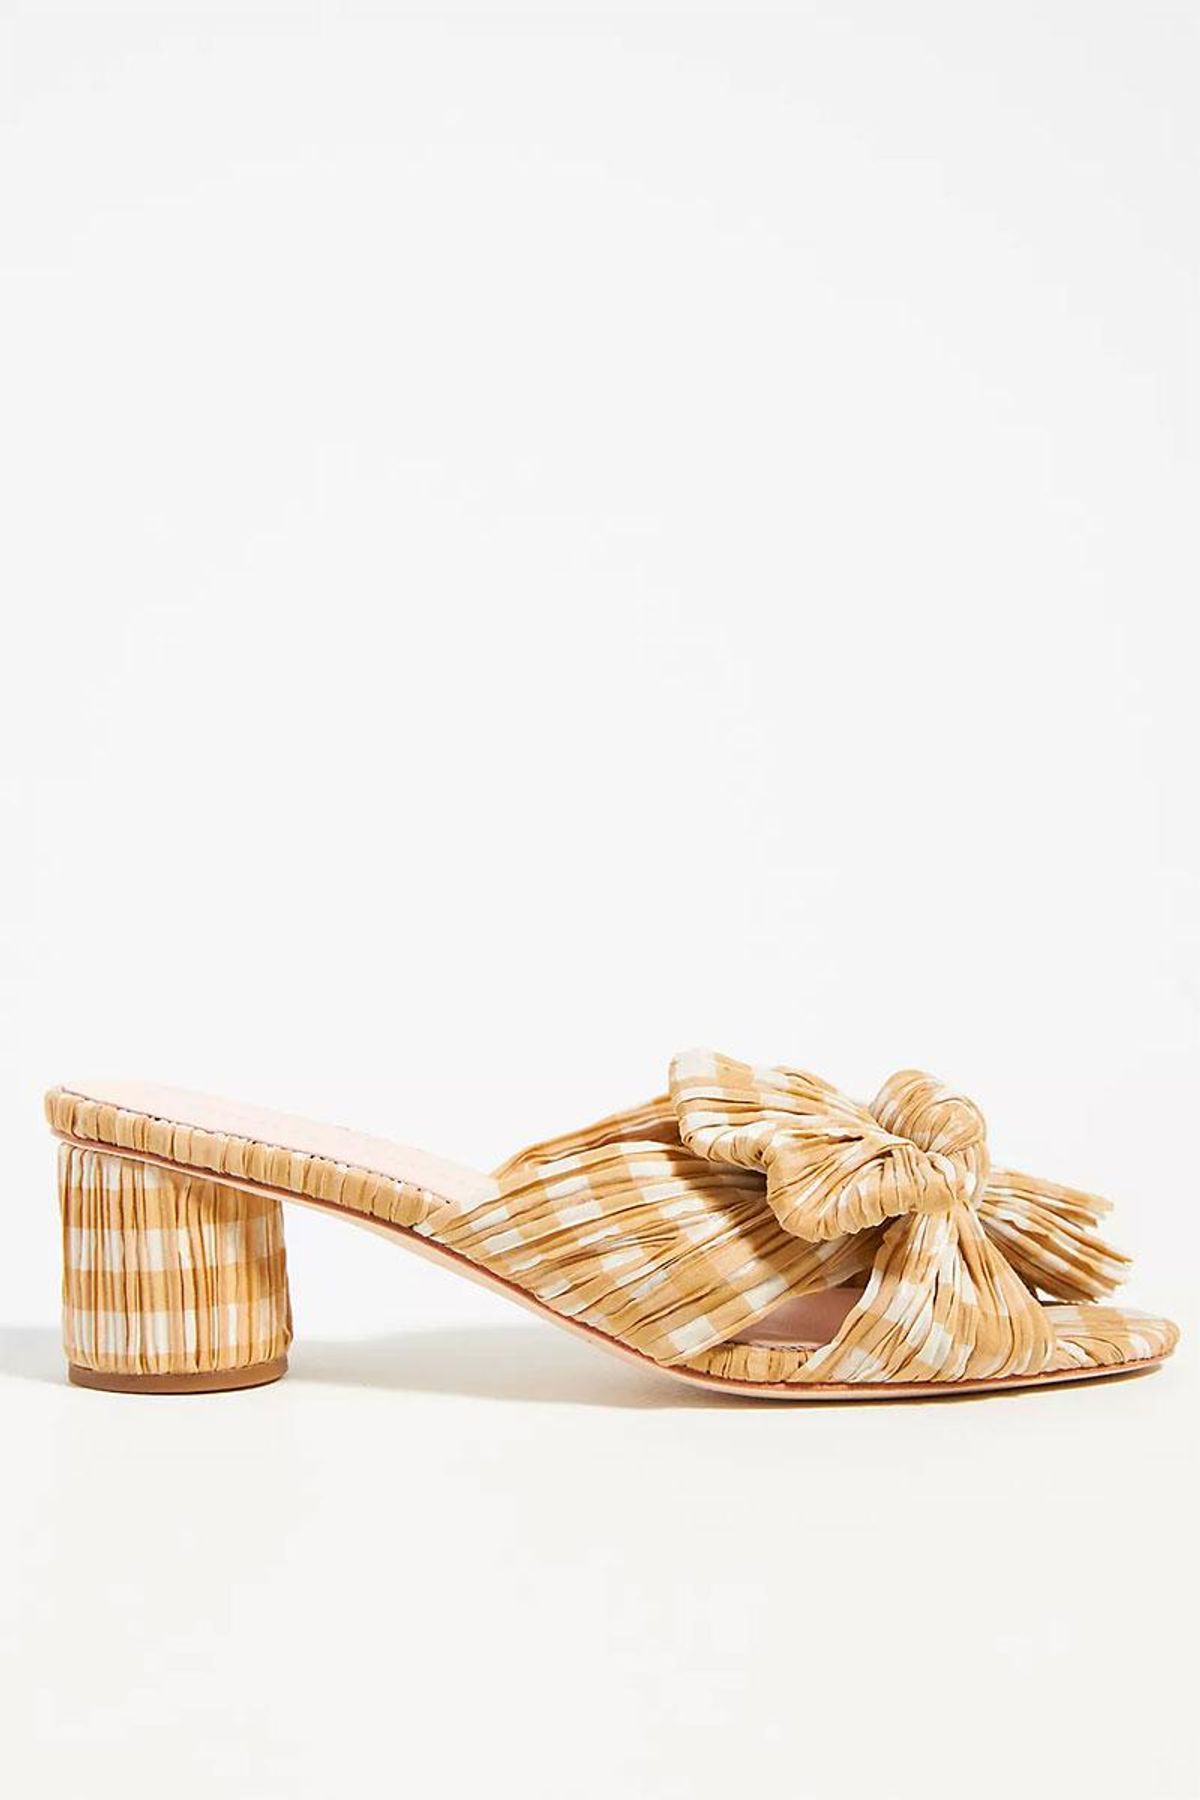 loeffler randall bow heeled slide sandals